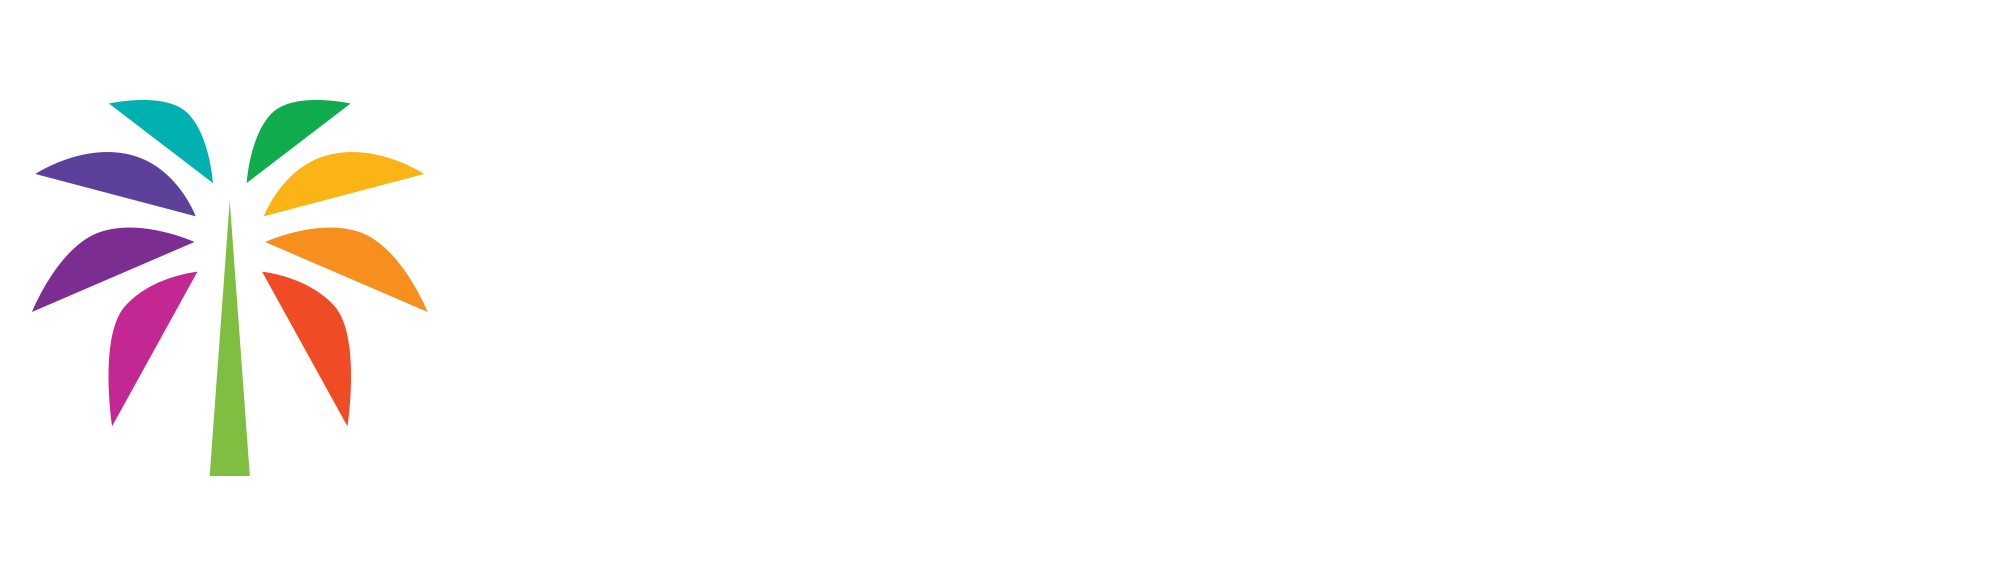 Townsville Shopping Centre logo